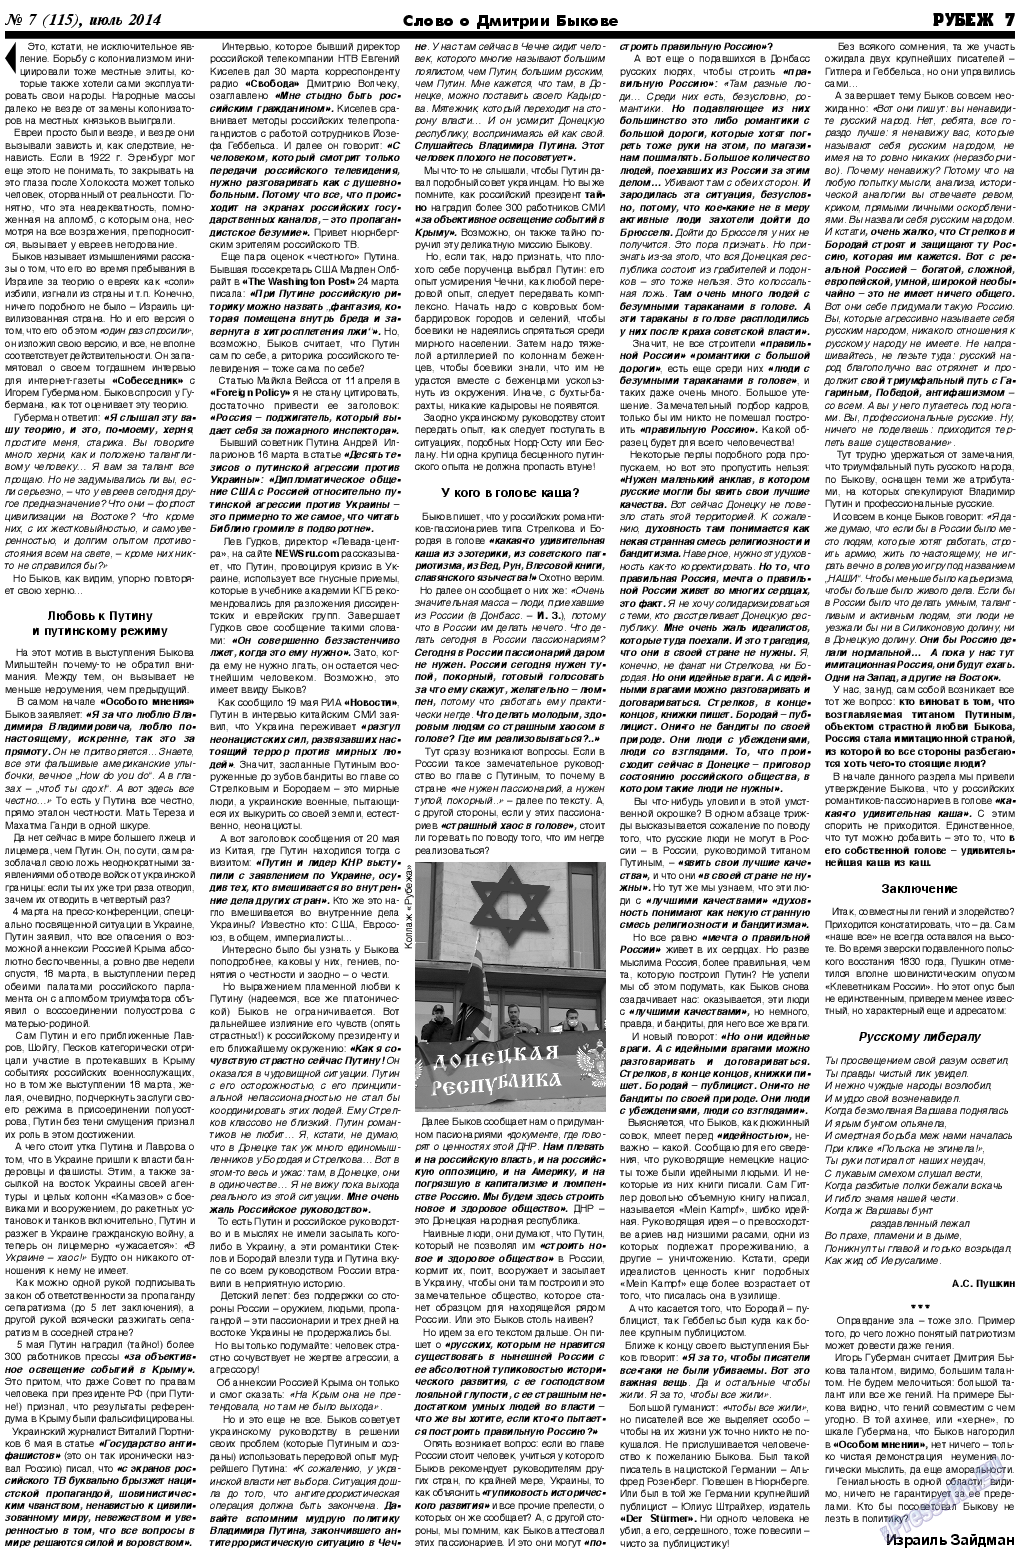 Рубеж, газета. 2014 №7 стр.7